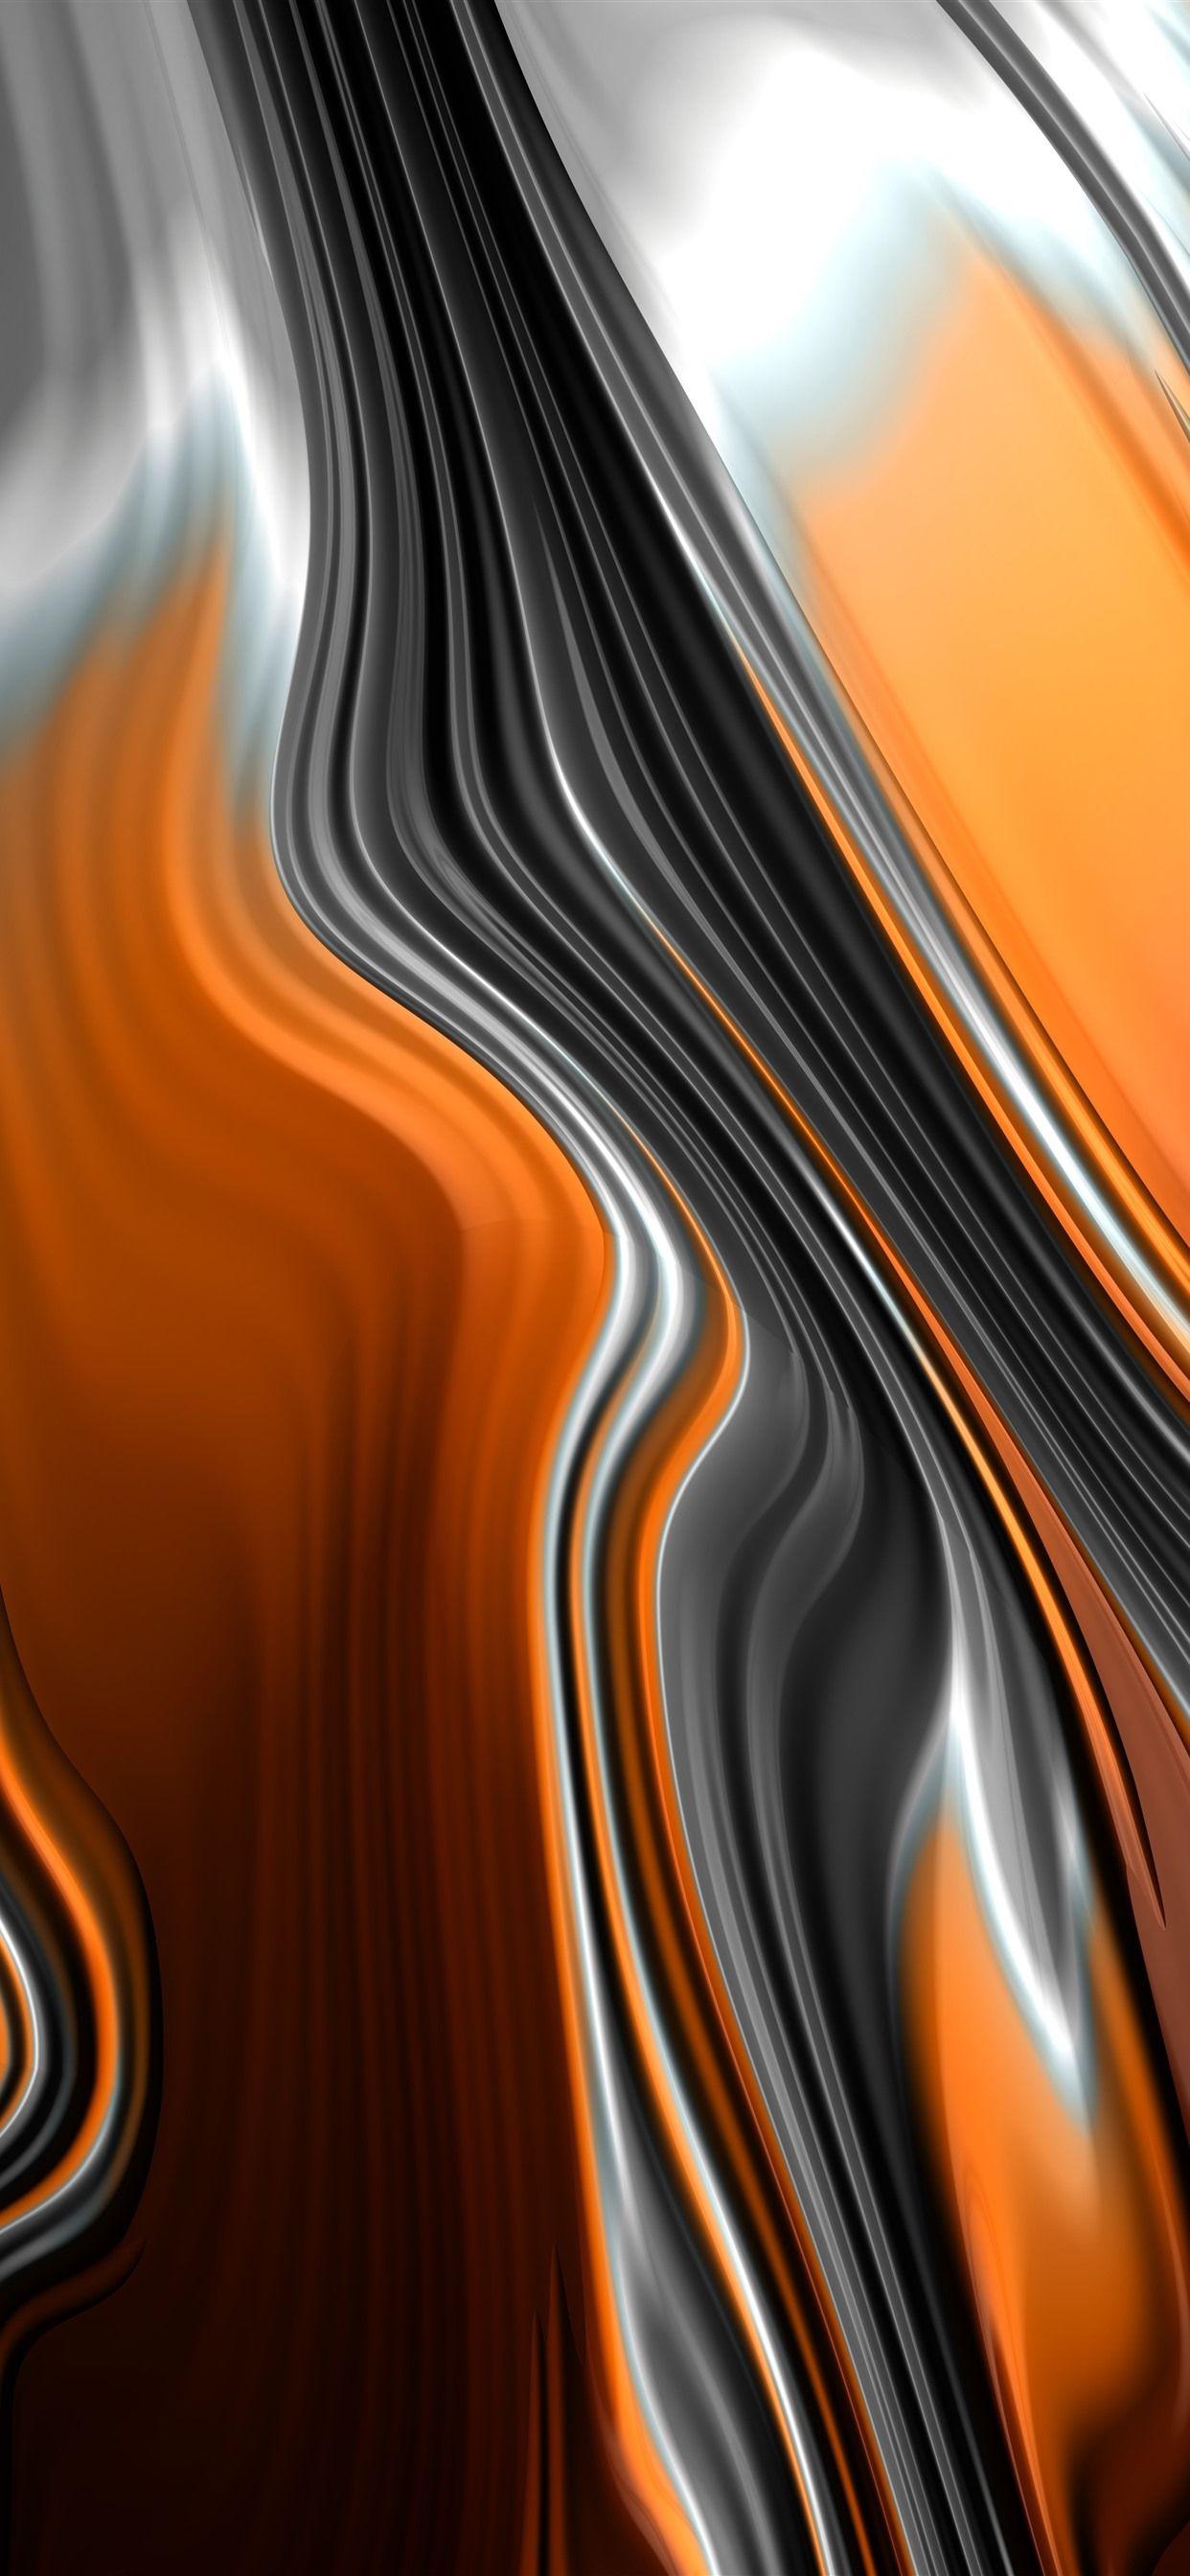 Black and Orange iPhone Wallpaper Free Black and Orange iPhone Background